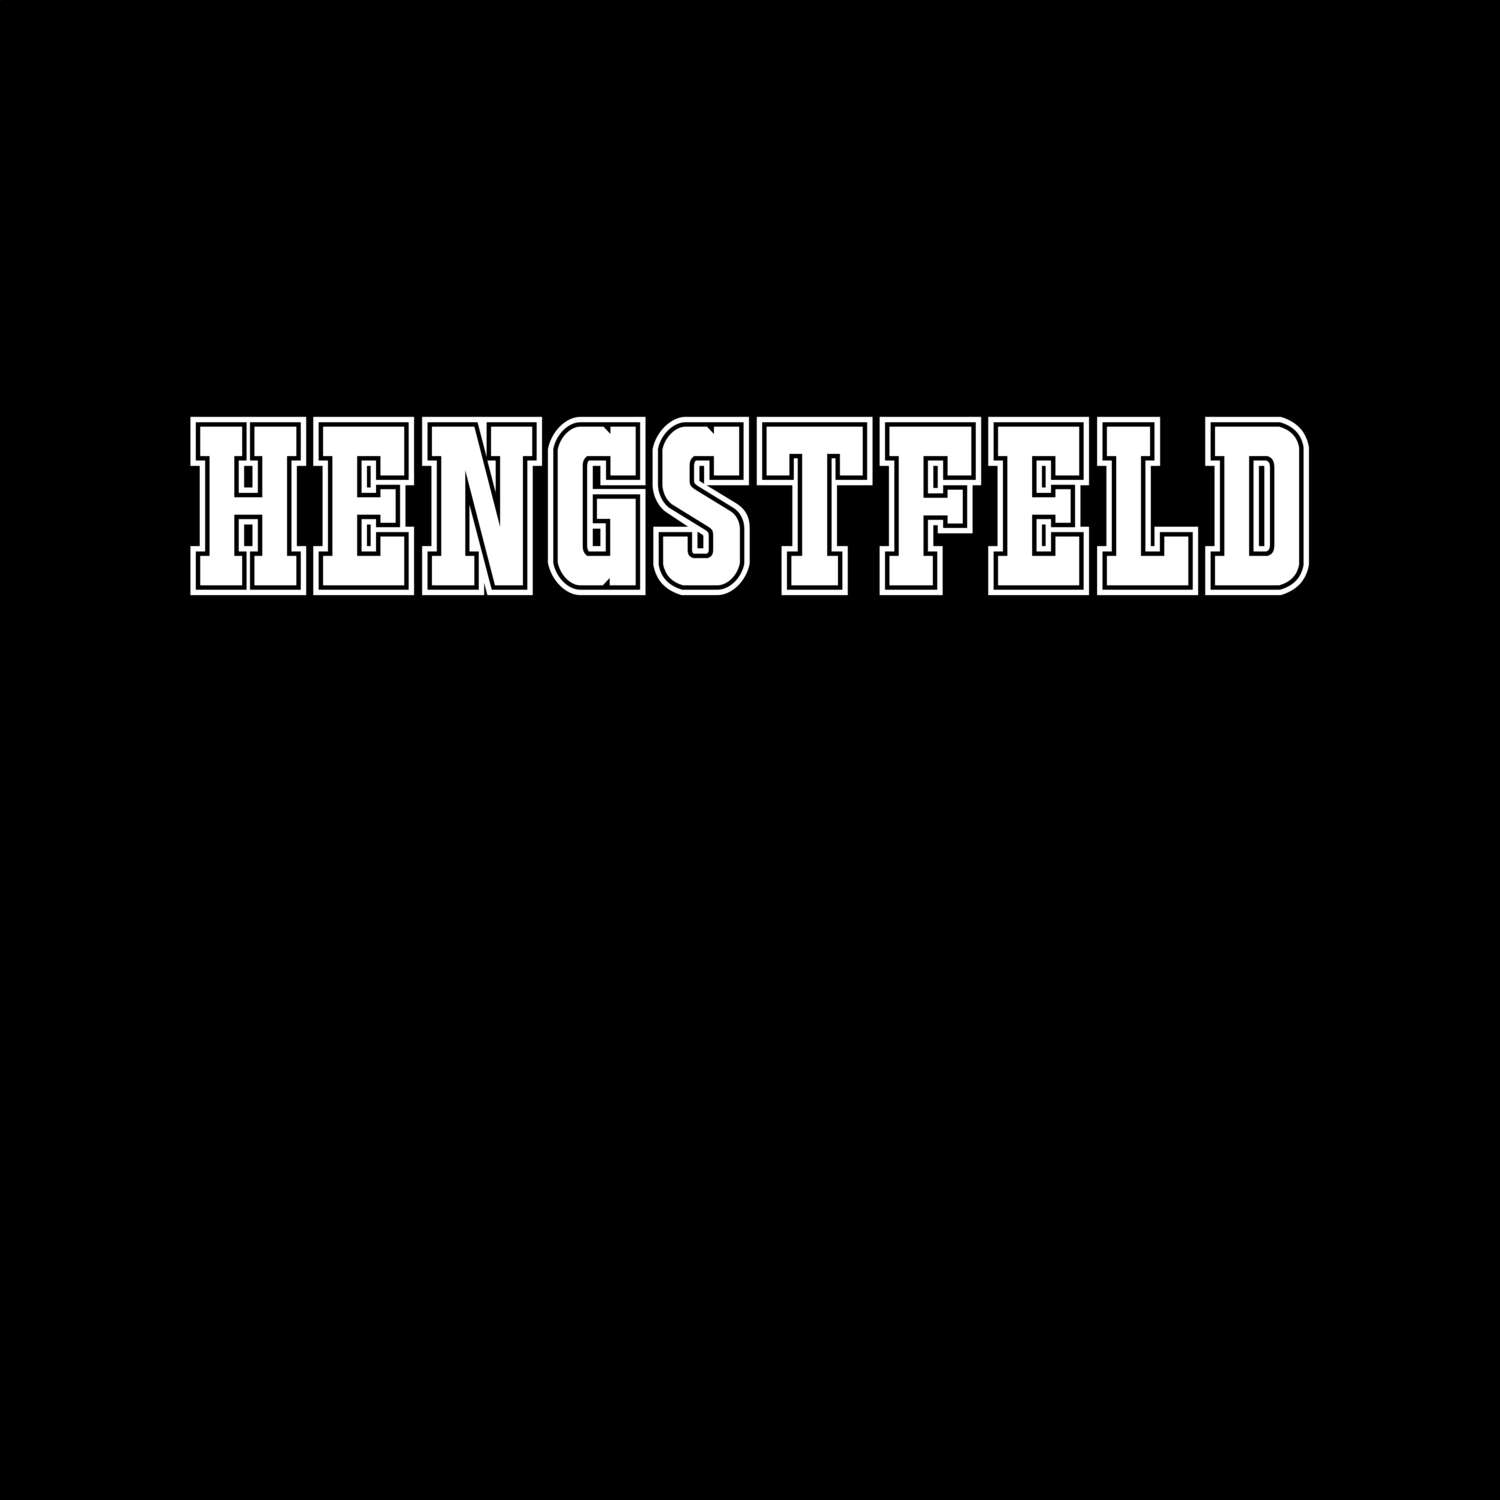 Hengstfeld T-Shirt »Classic«